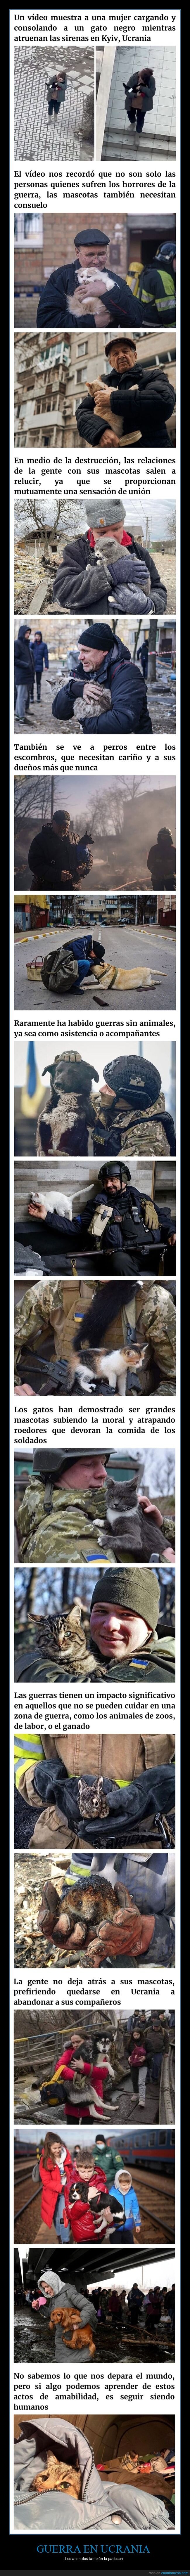 animales,guerra,ucrania